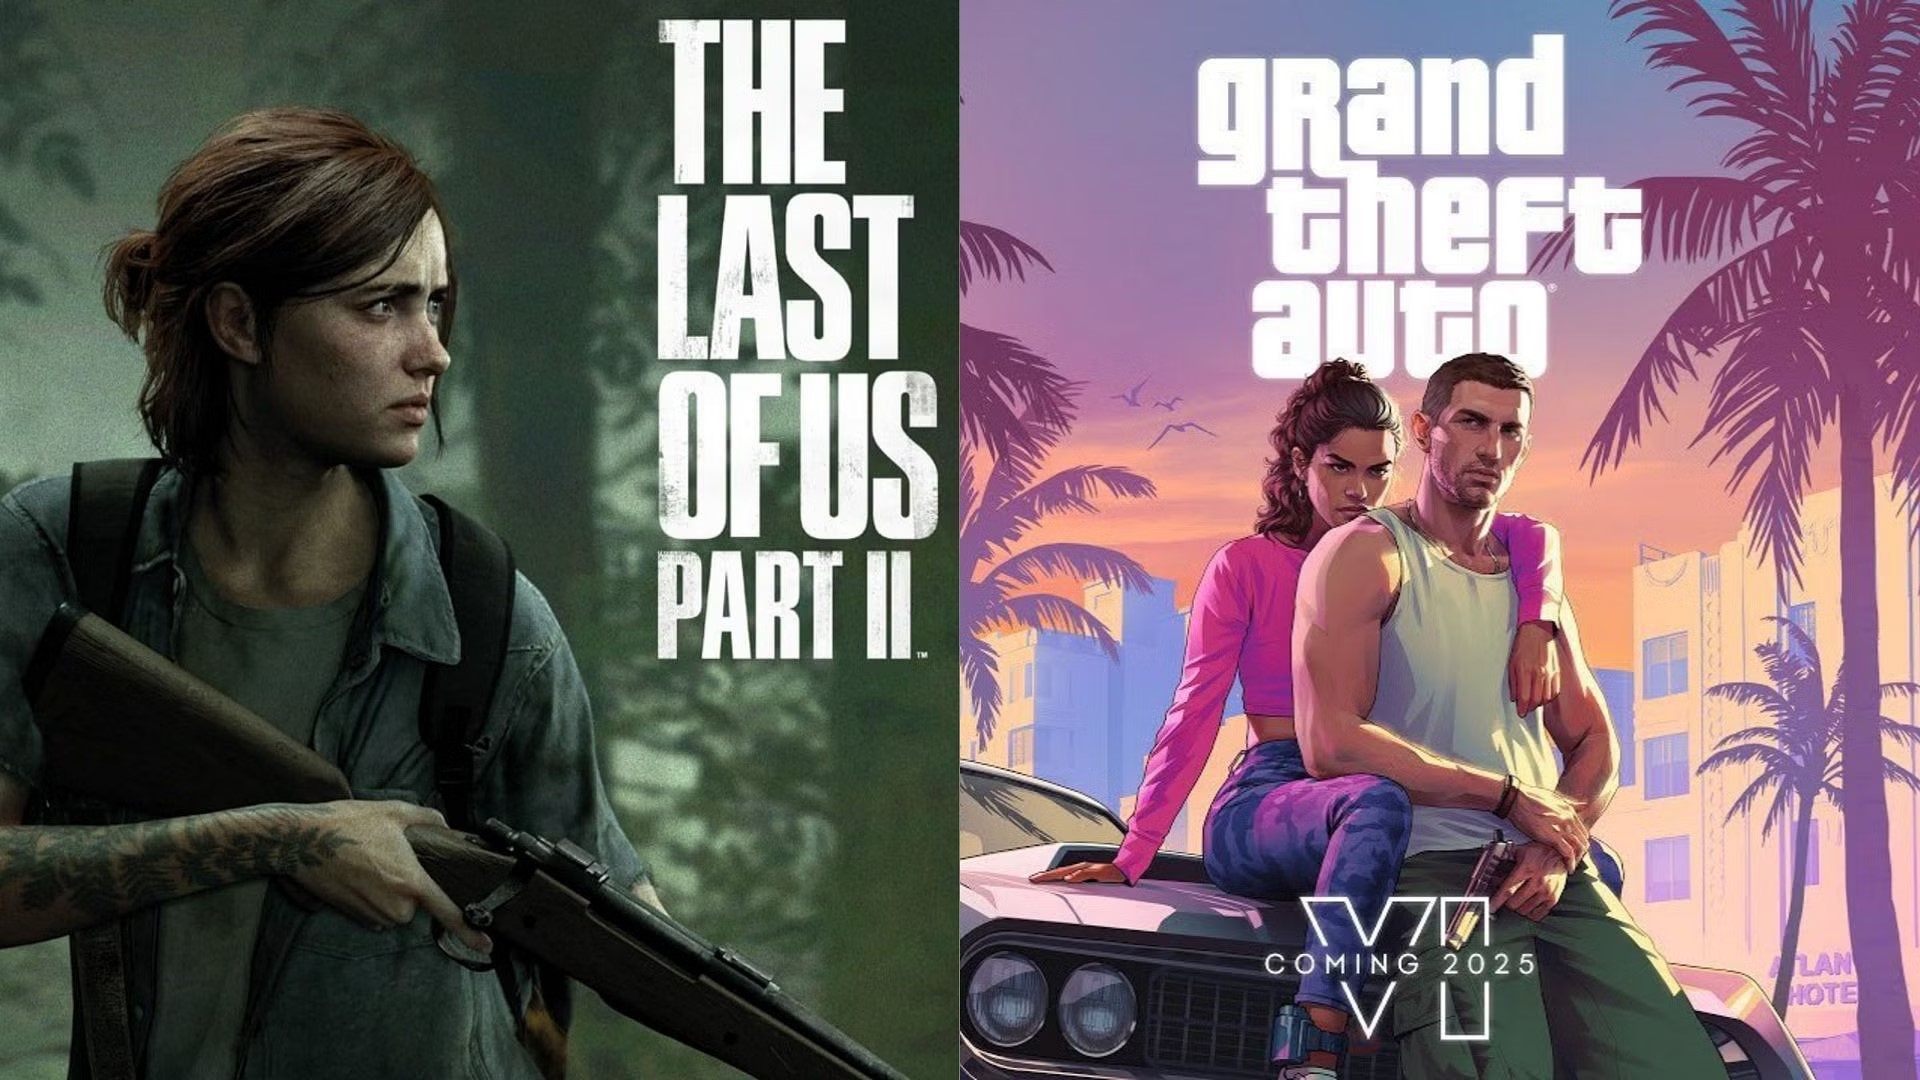 Rockstar Website Down As Senior Artist Claims GTA 6 Will Be Far Better Than The Last Of Us Part II